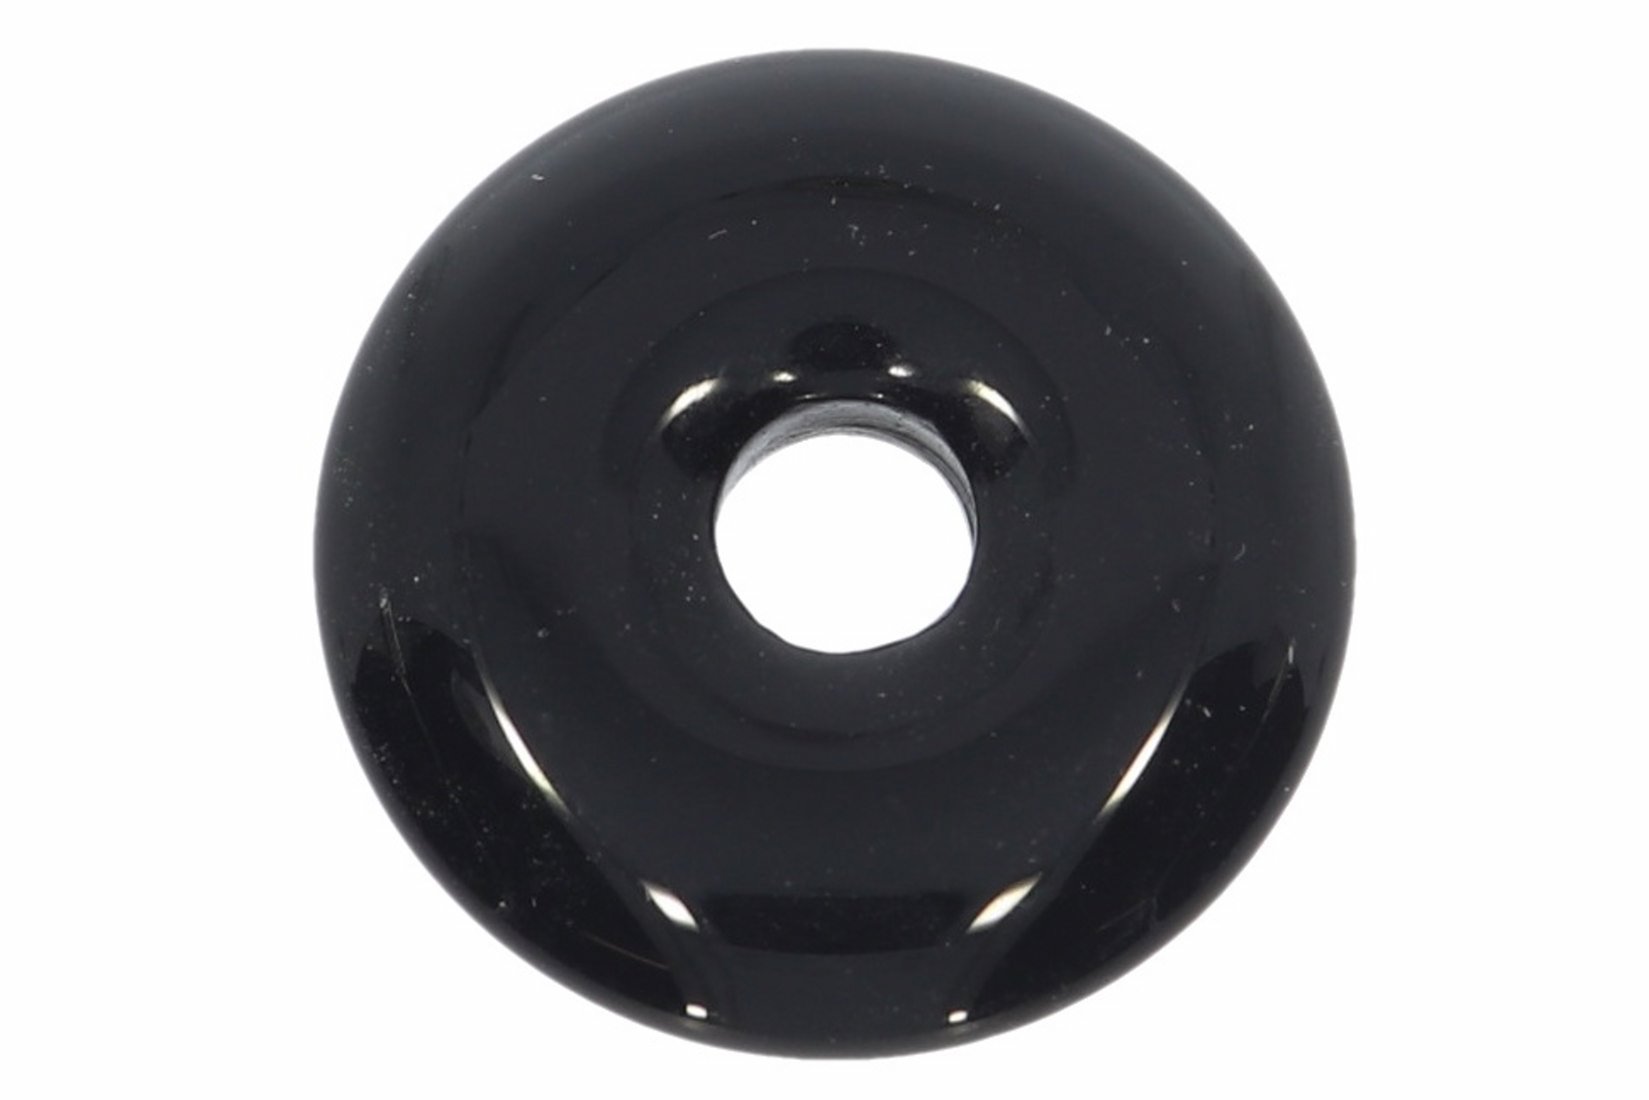 Obsidian schwarz Donut Schmuck Anhänger 20mm & Donut Halter Silber HS1584